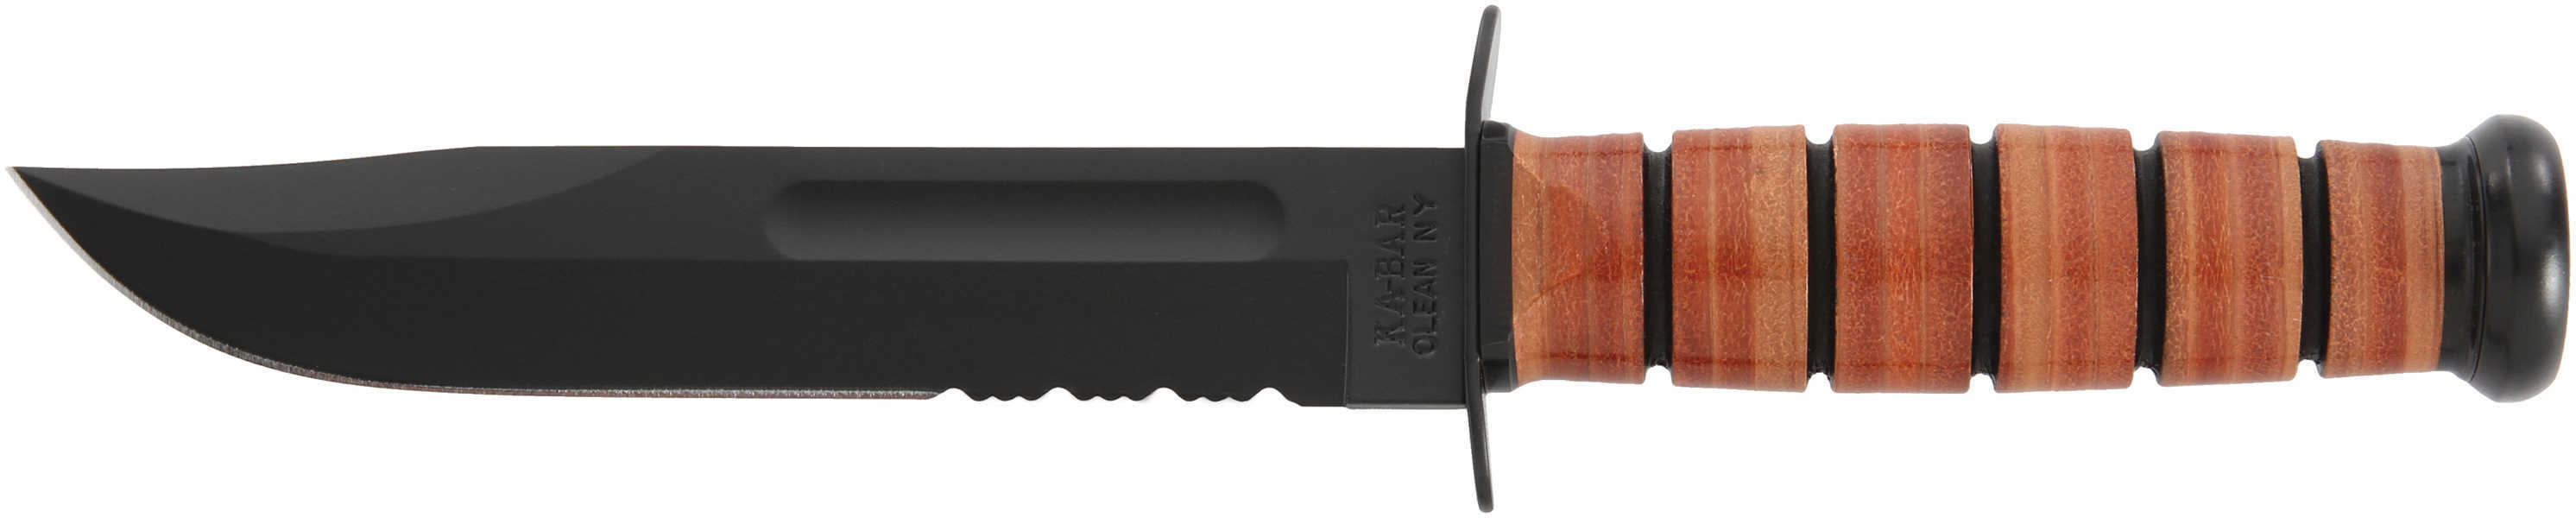 Ka-Bar US Military Fighting/Utility Knife USMC, Serrated Edge, With Leather Sheath 2-1218-5